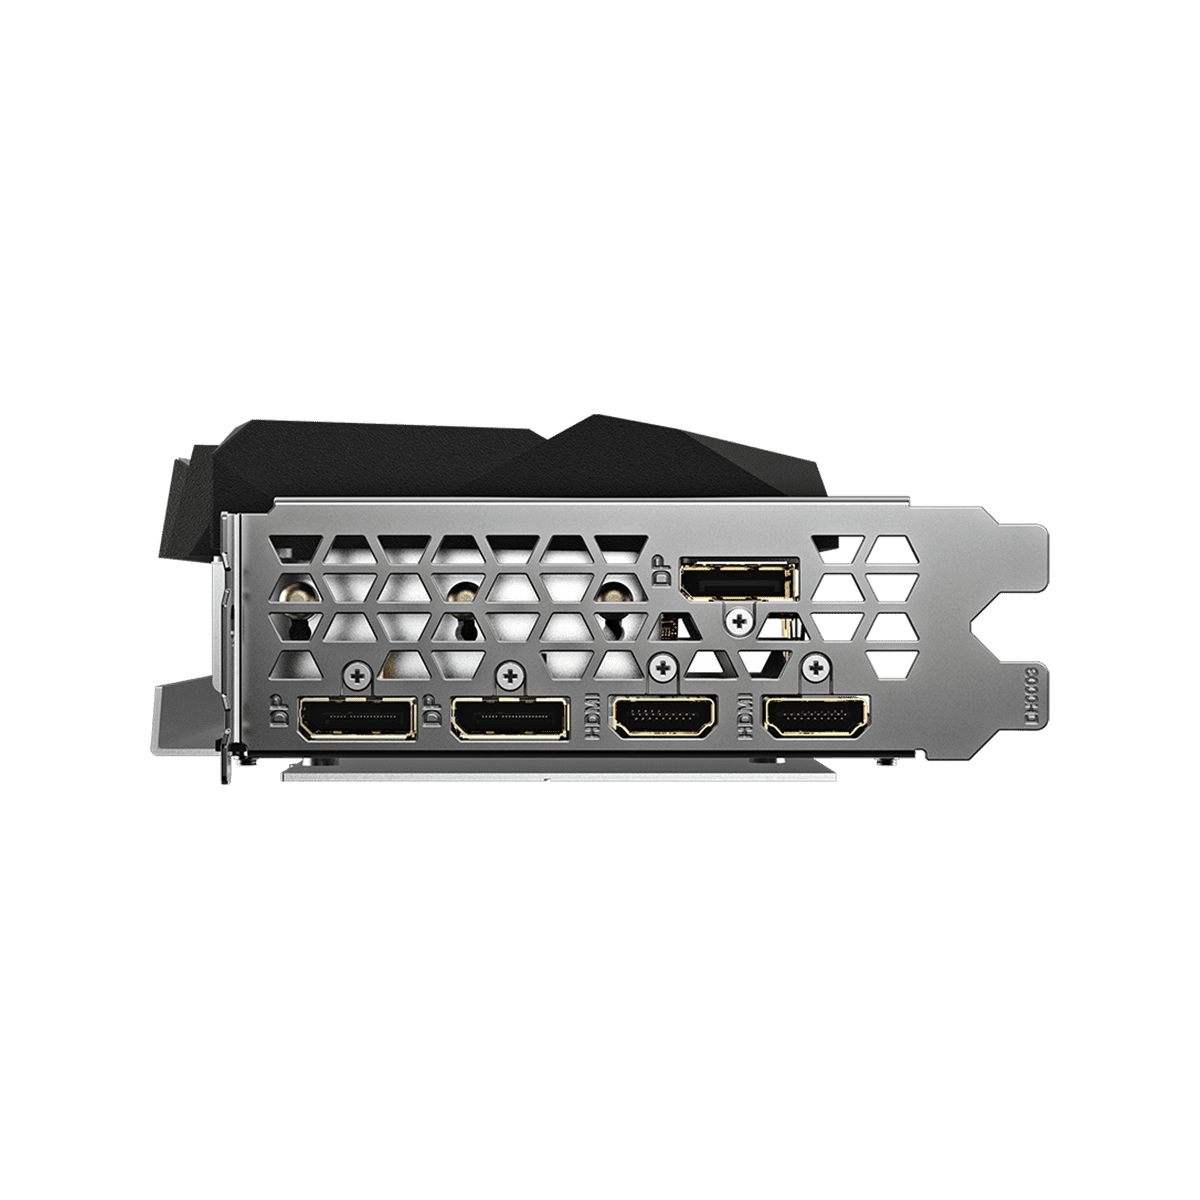 GV-N3080GAMING OC-10GD R2.0 | GIGABYTE NVIDIA GEFORCE RTX 3080